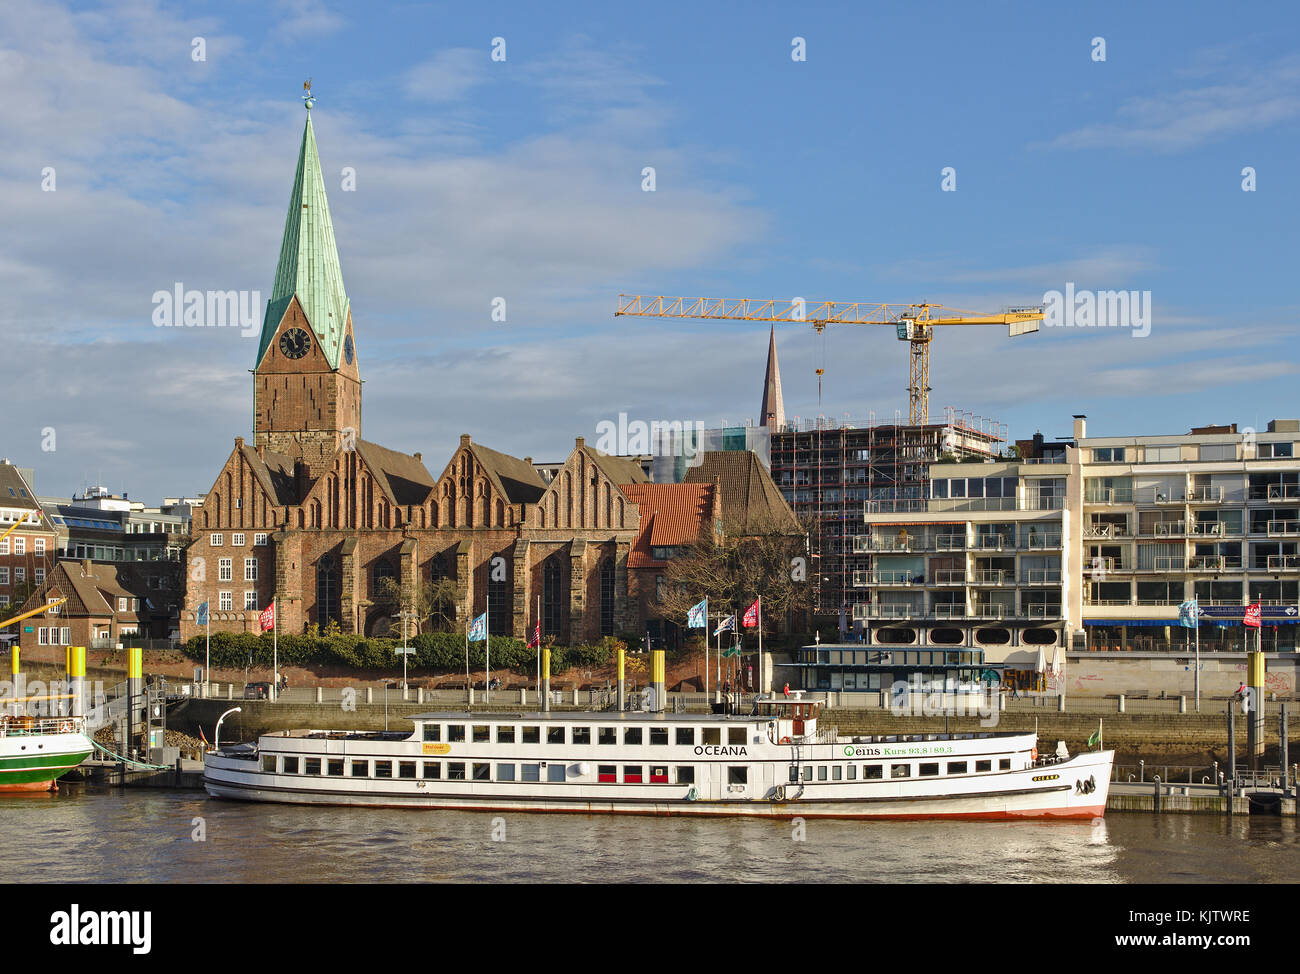 Bremen, 23. November 2017 - Passagierschiff Oceana an ihren Liegeplätzen vor der St. Martini-Kirche Stockfoto